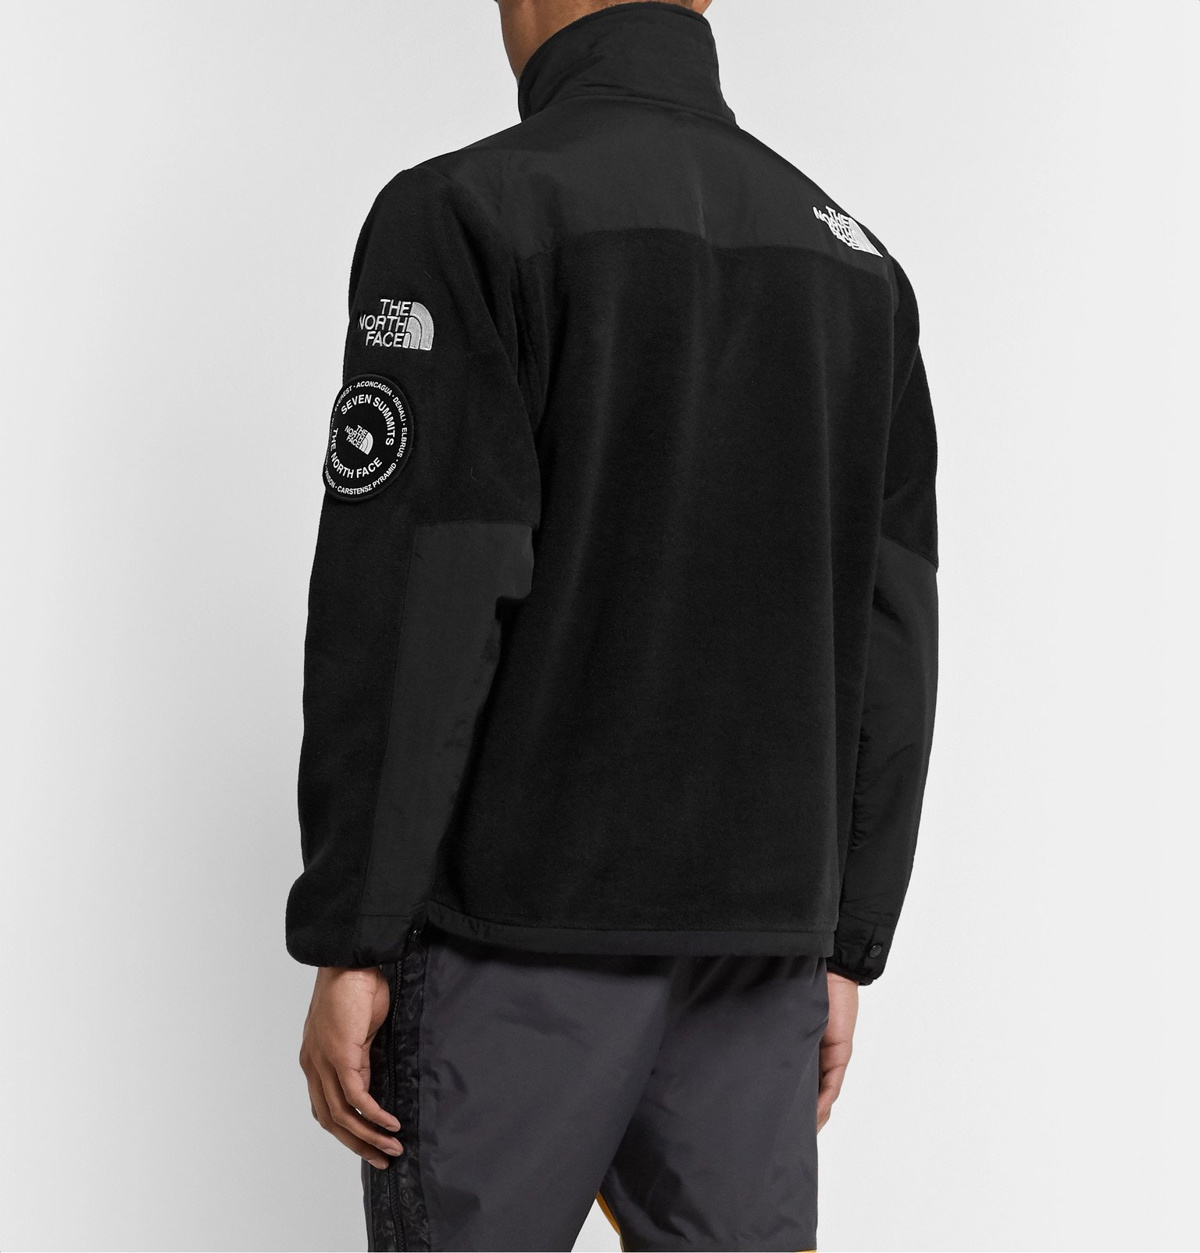 Denali fleece jacket in black - The North Face